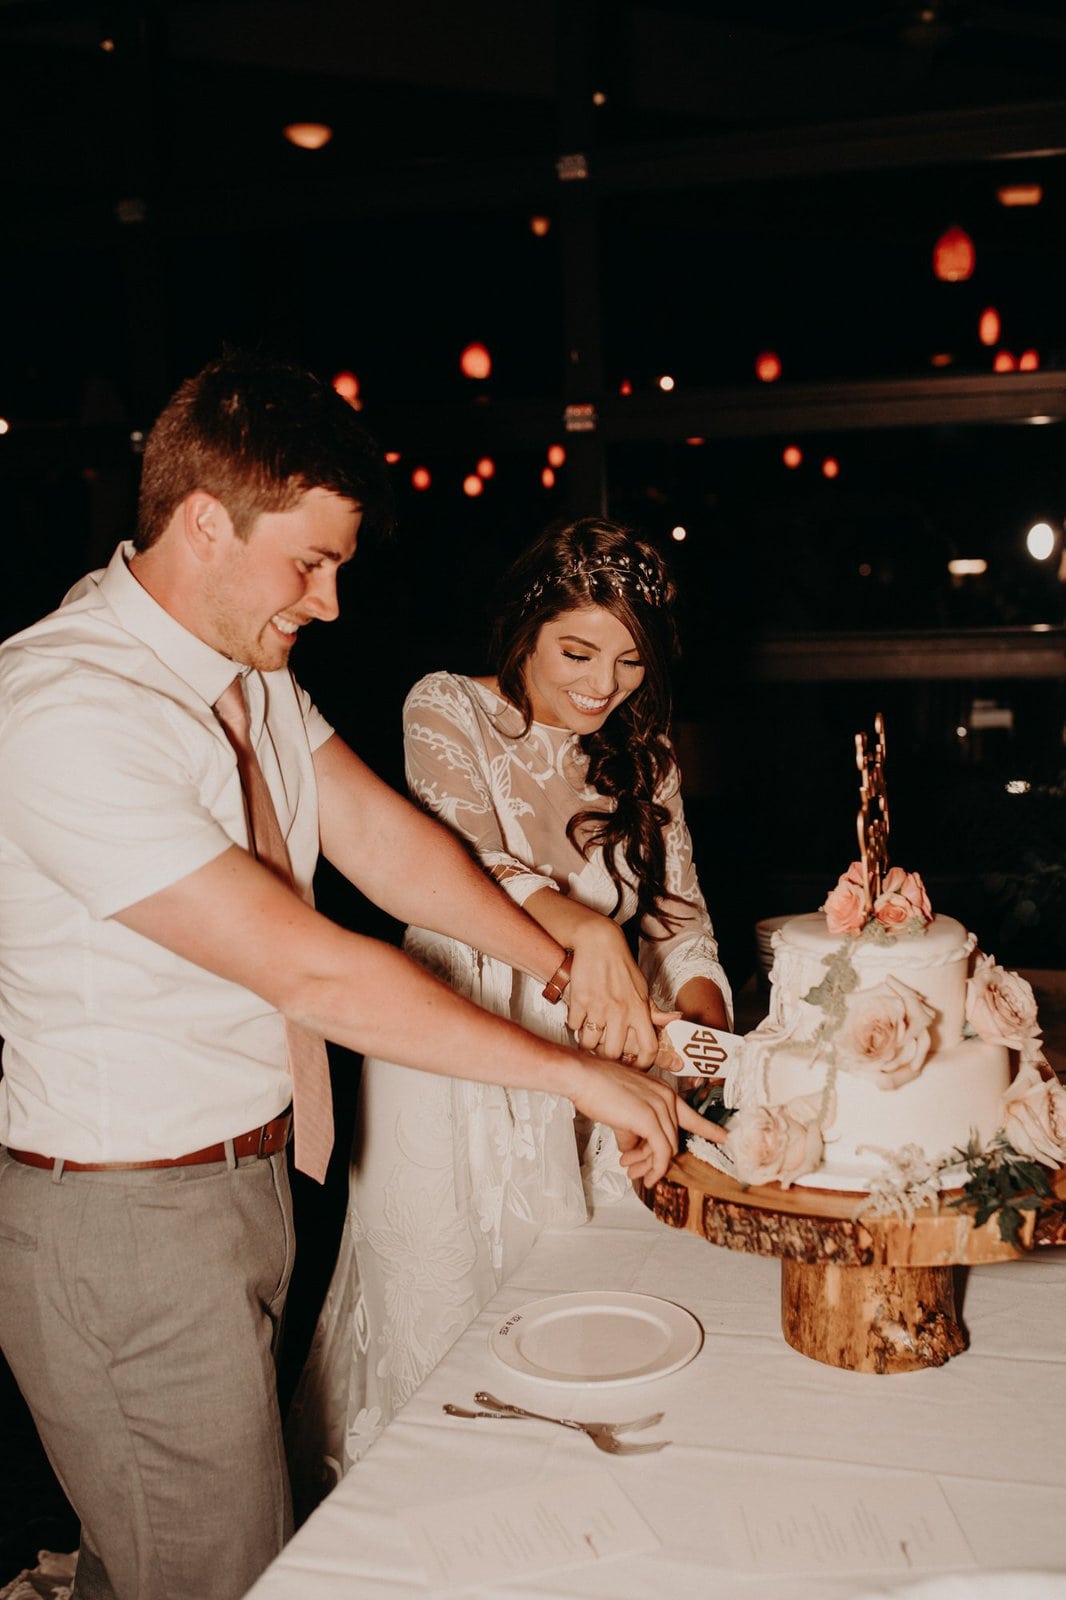 bride and groom cut their wedding cake.